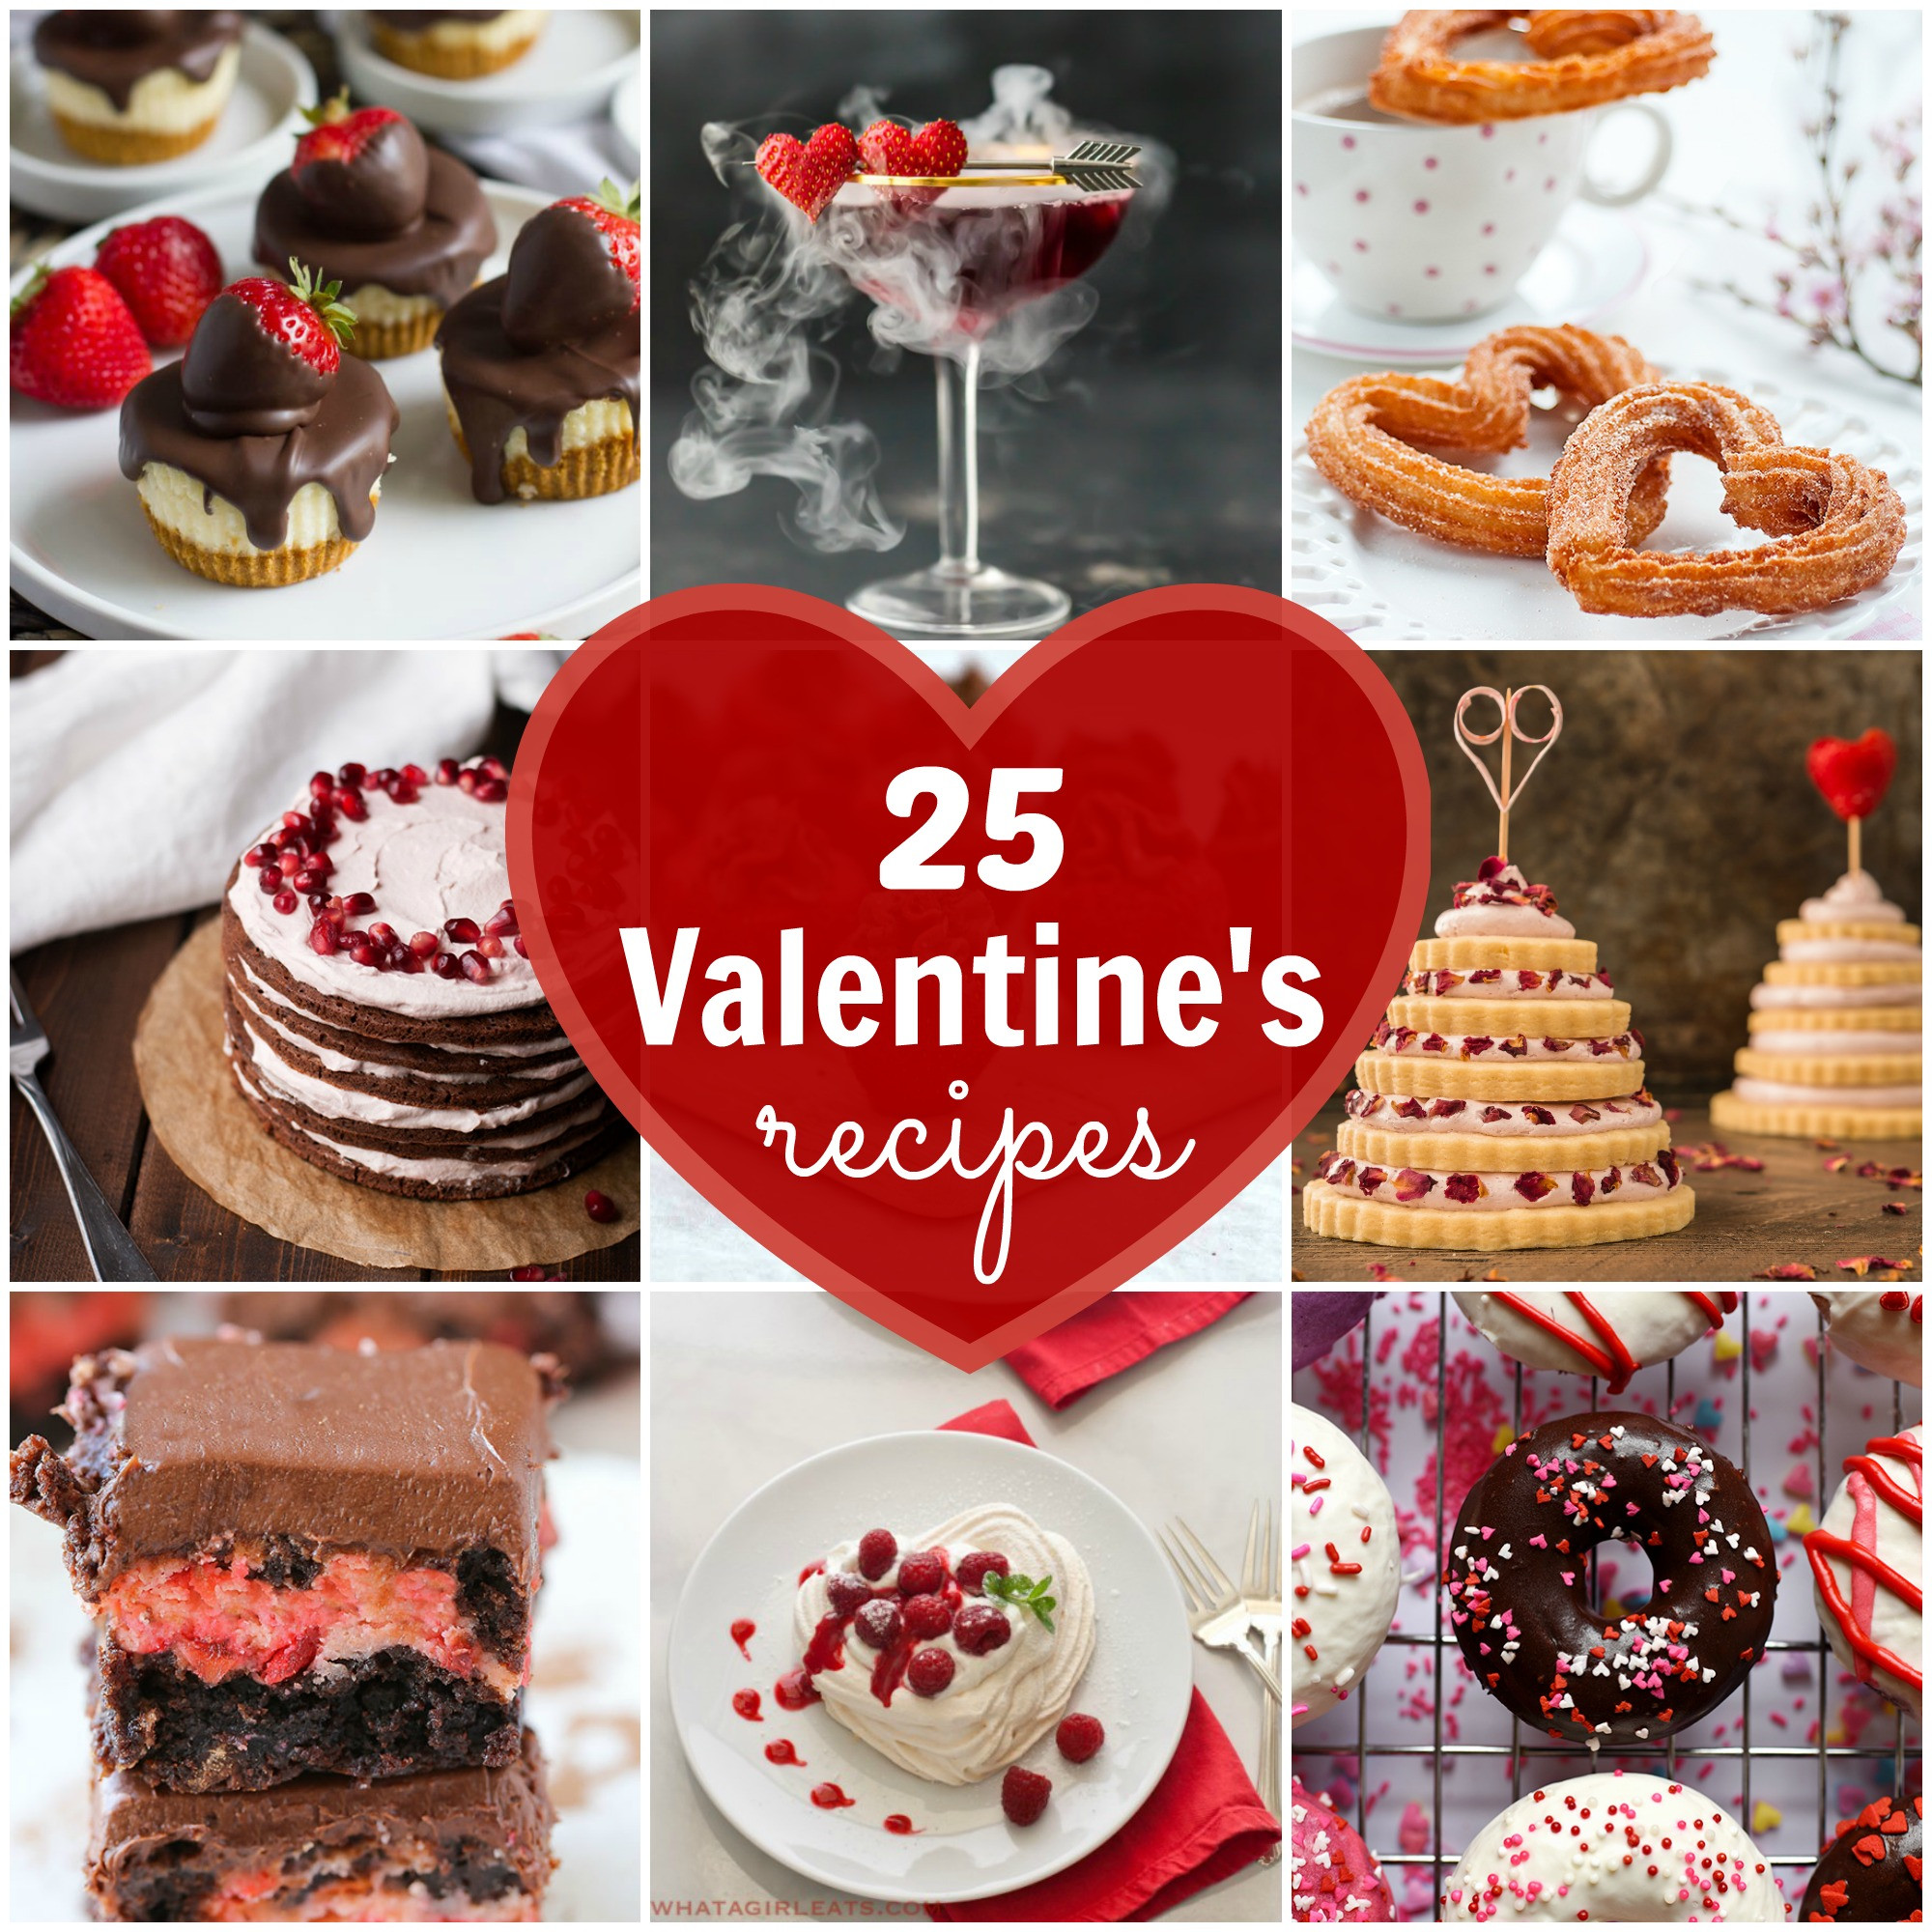 Valentines Recipes Desserts
 25 Valentine s Day Dessert And Cocktail Recipes